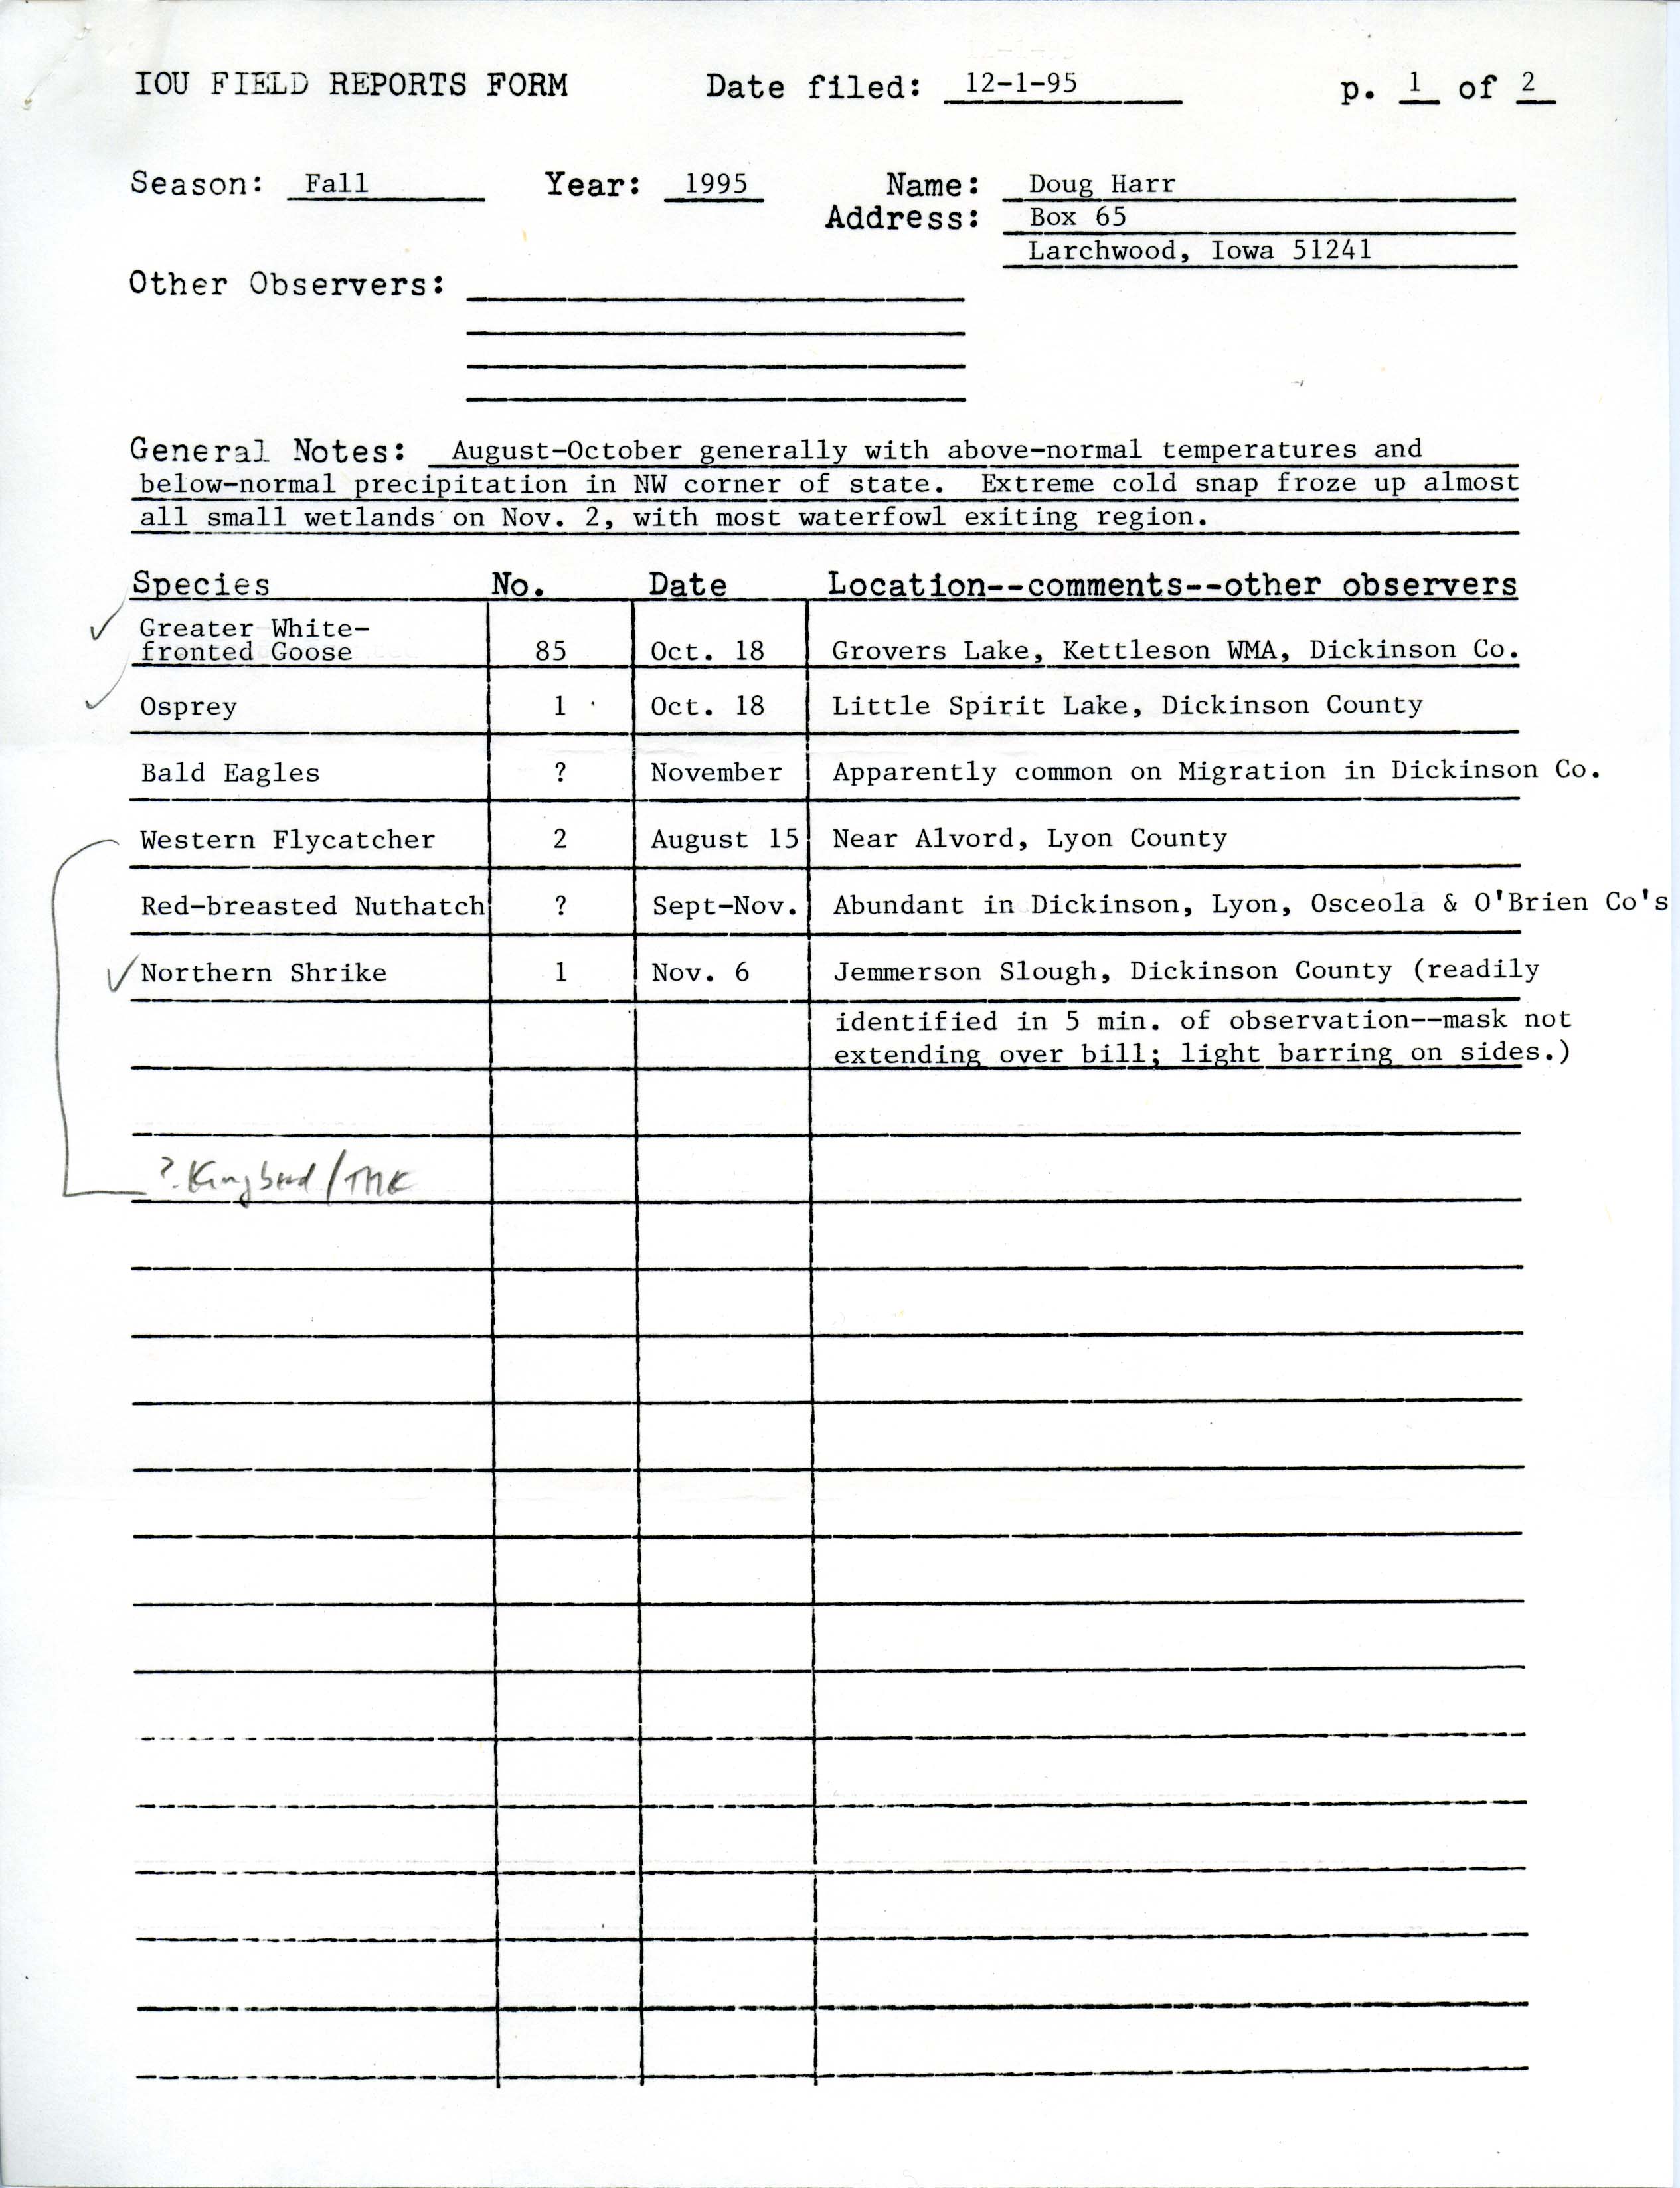 IOU field reports form, Douglas C. Harr, December 1, 1995